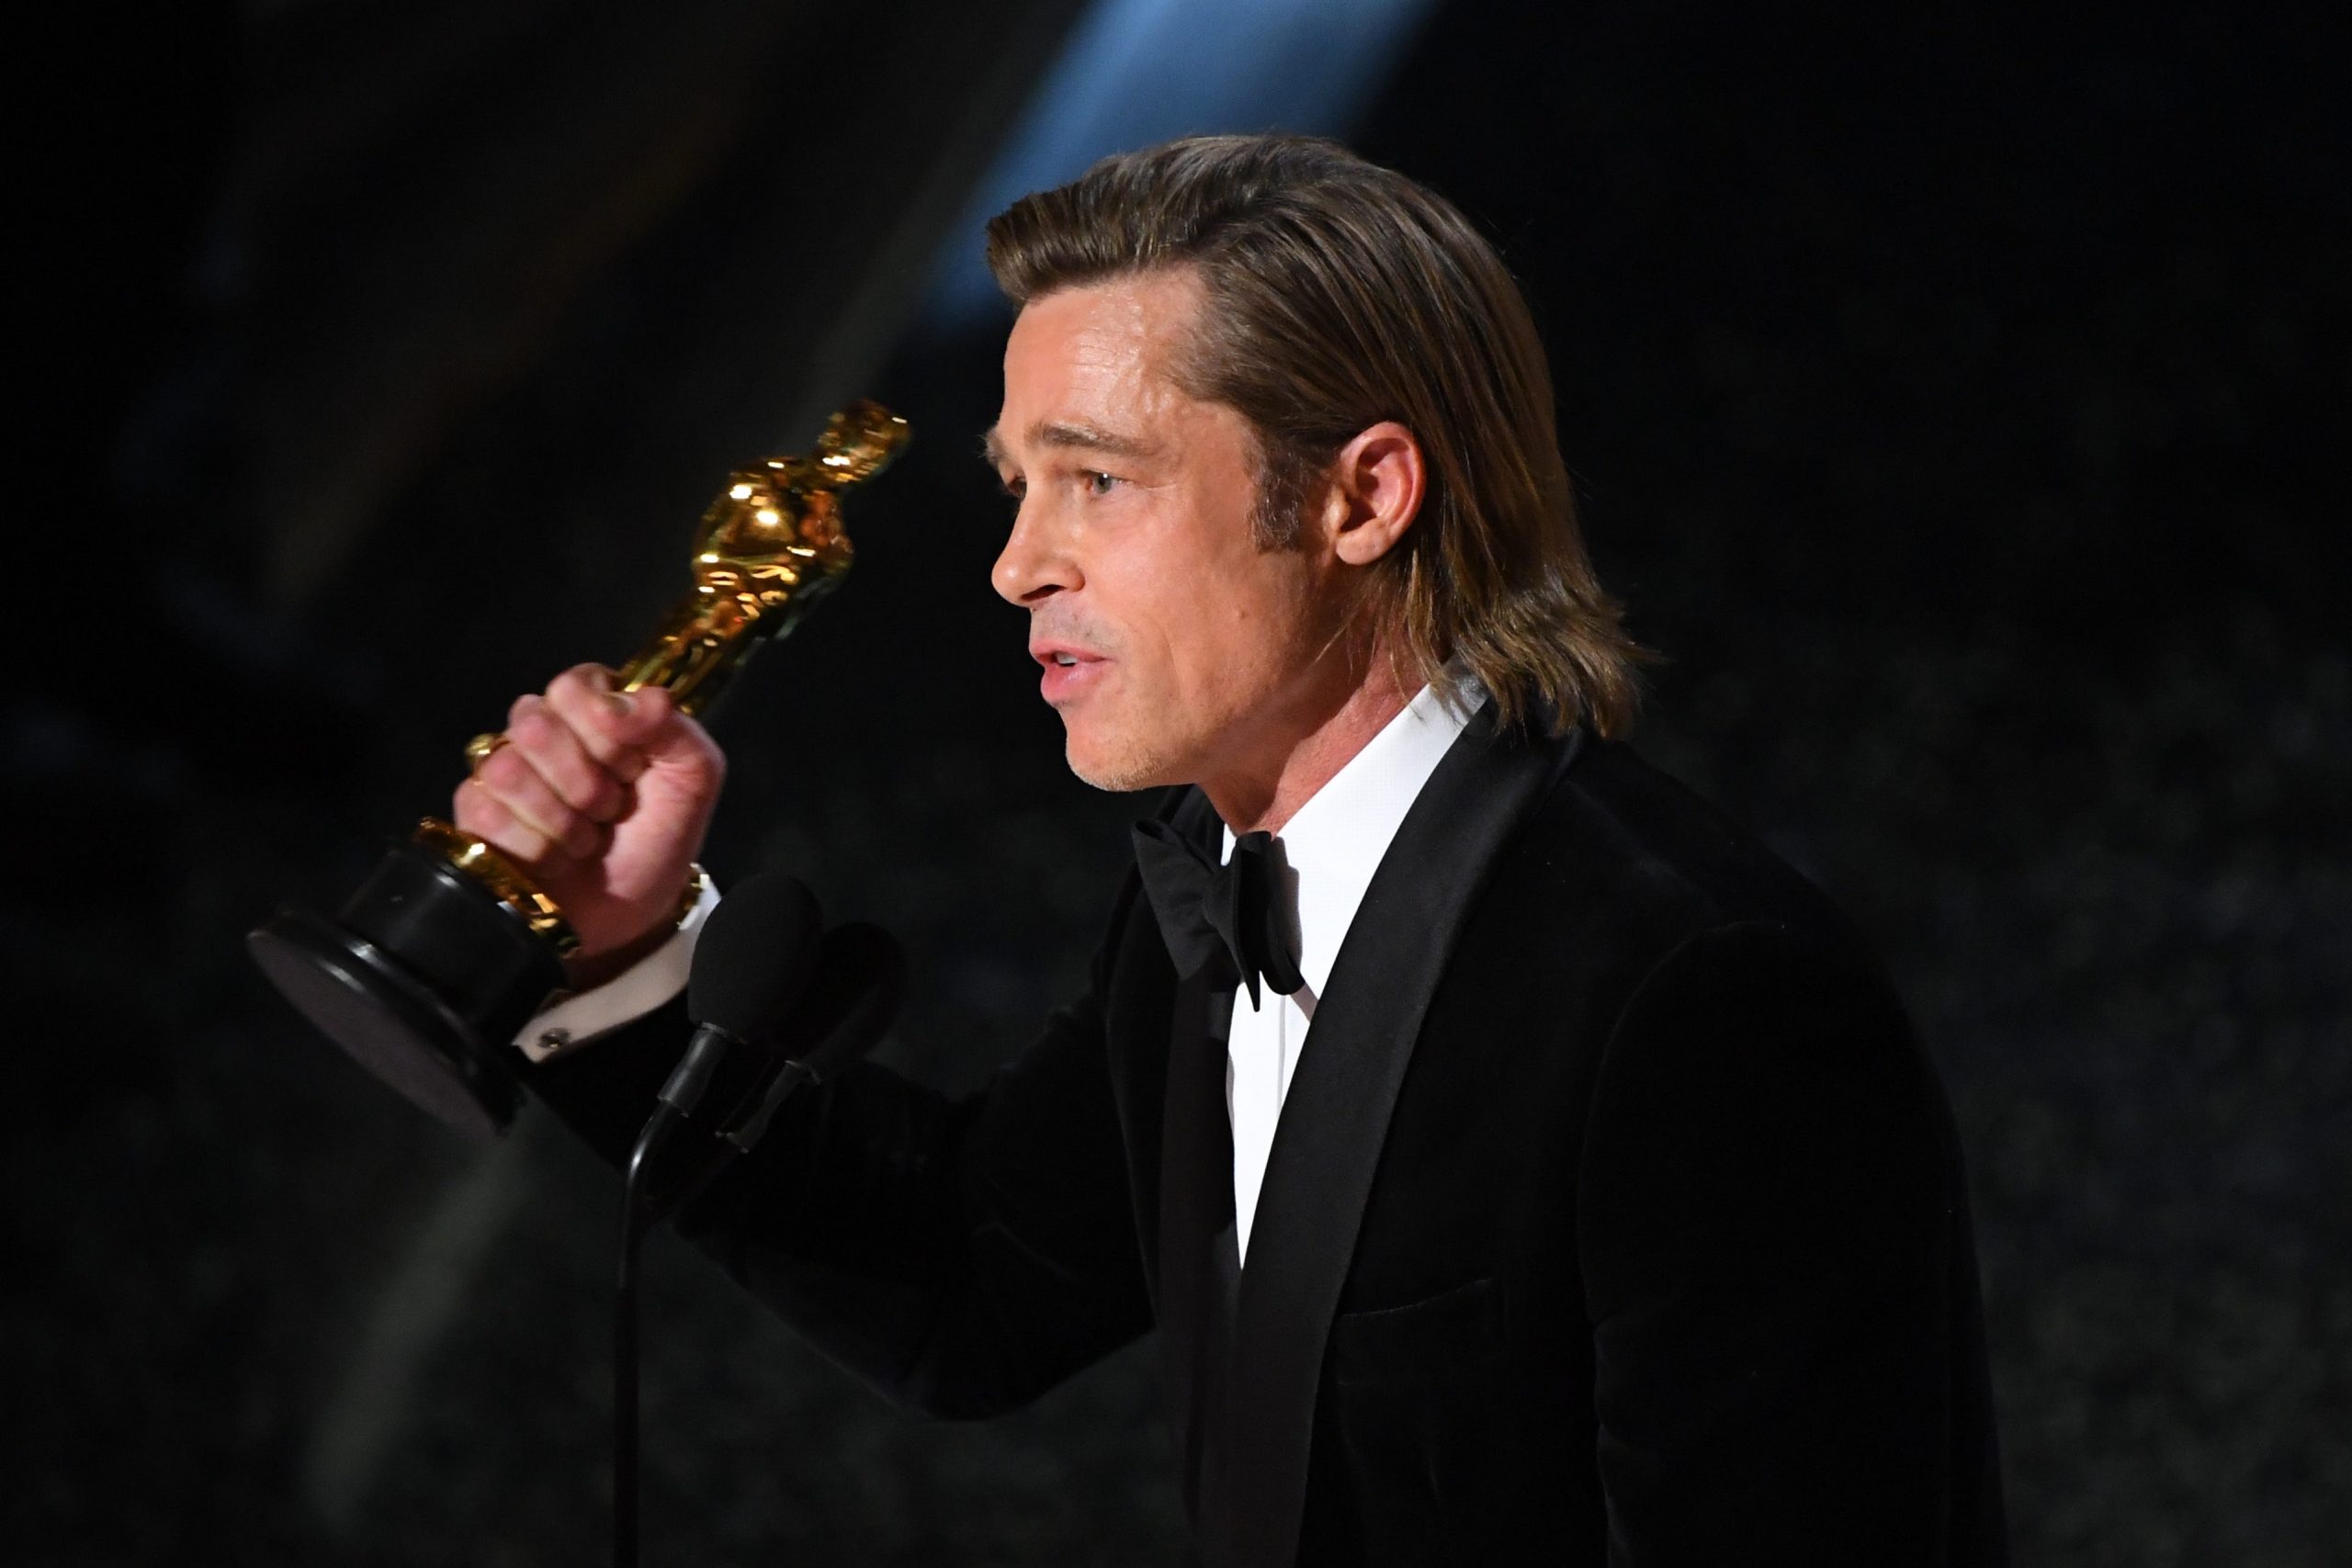 Brad Pitt and Leonardo DiCaprio's Bromance Was the Best Part of Awards  Season